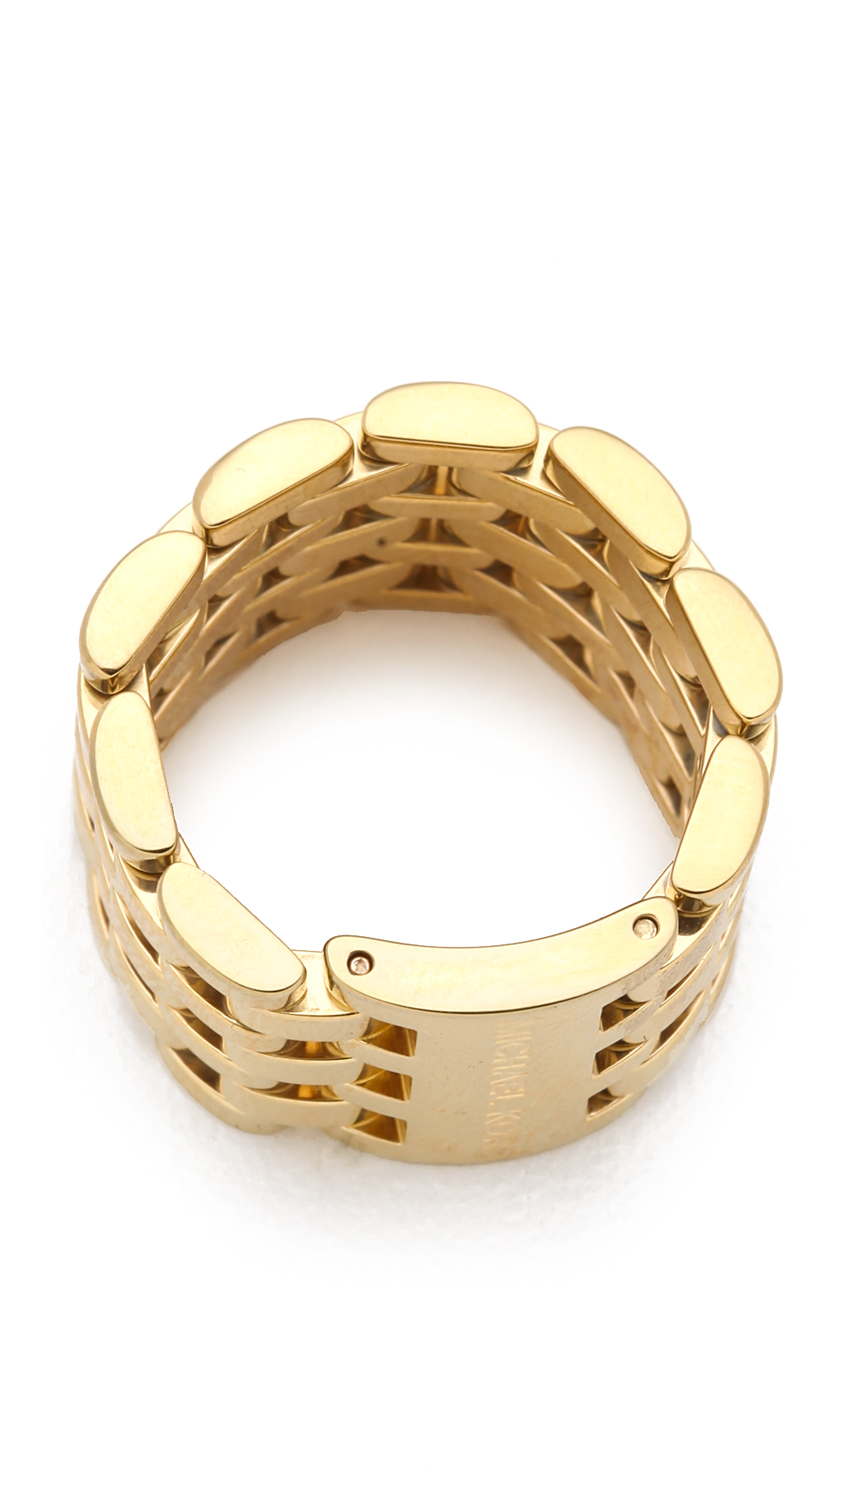 Michael Kors Watch Link Ring in Gold (Metallic) - Lyst